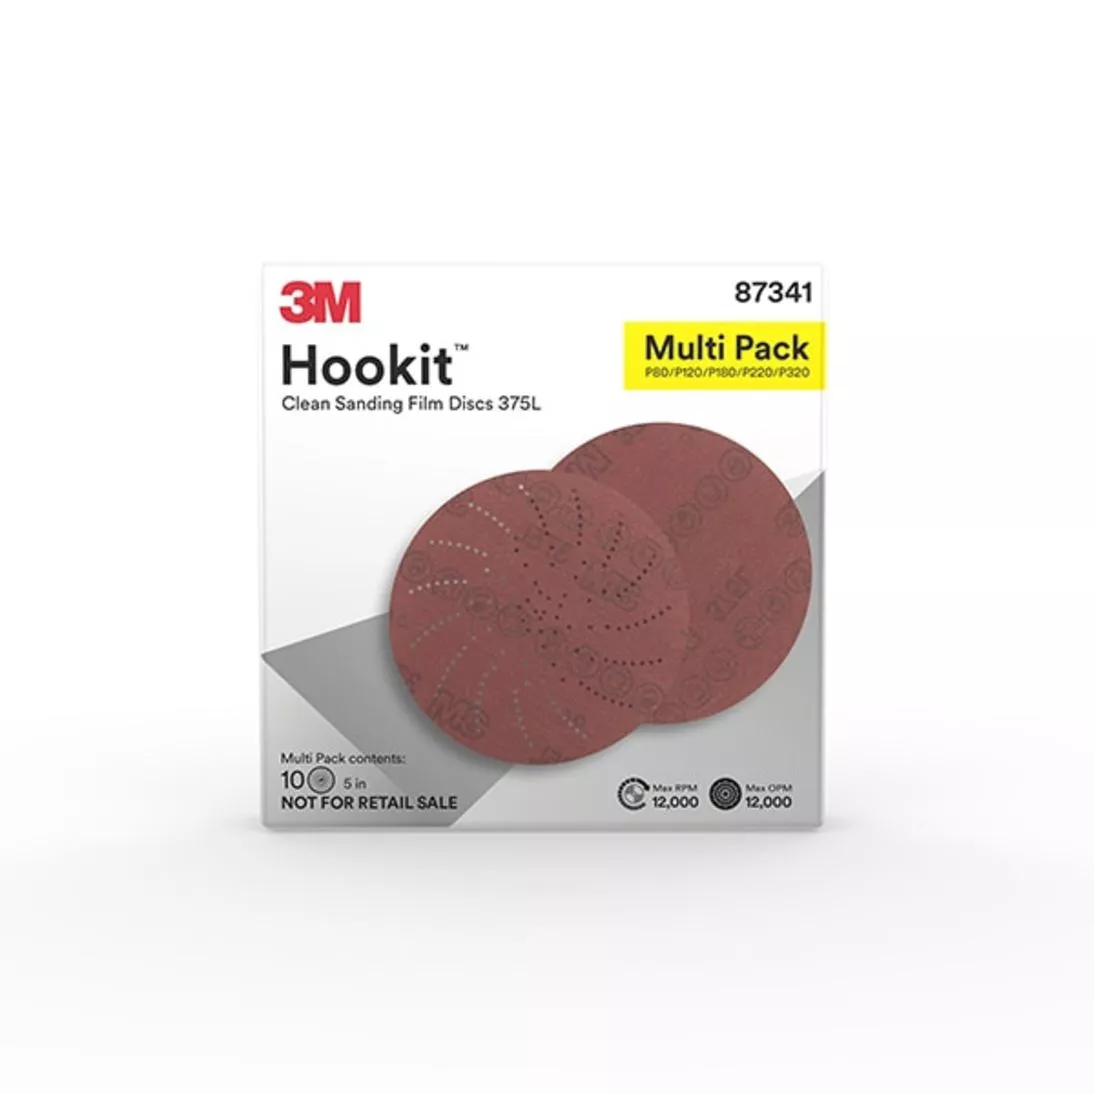 3M™ Hookit™ Film Clean Sanding Film Disc 375L, 5 x NH, P80 to P320,
Multi Pack, 10/Pack, 20 Packs/Case